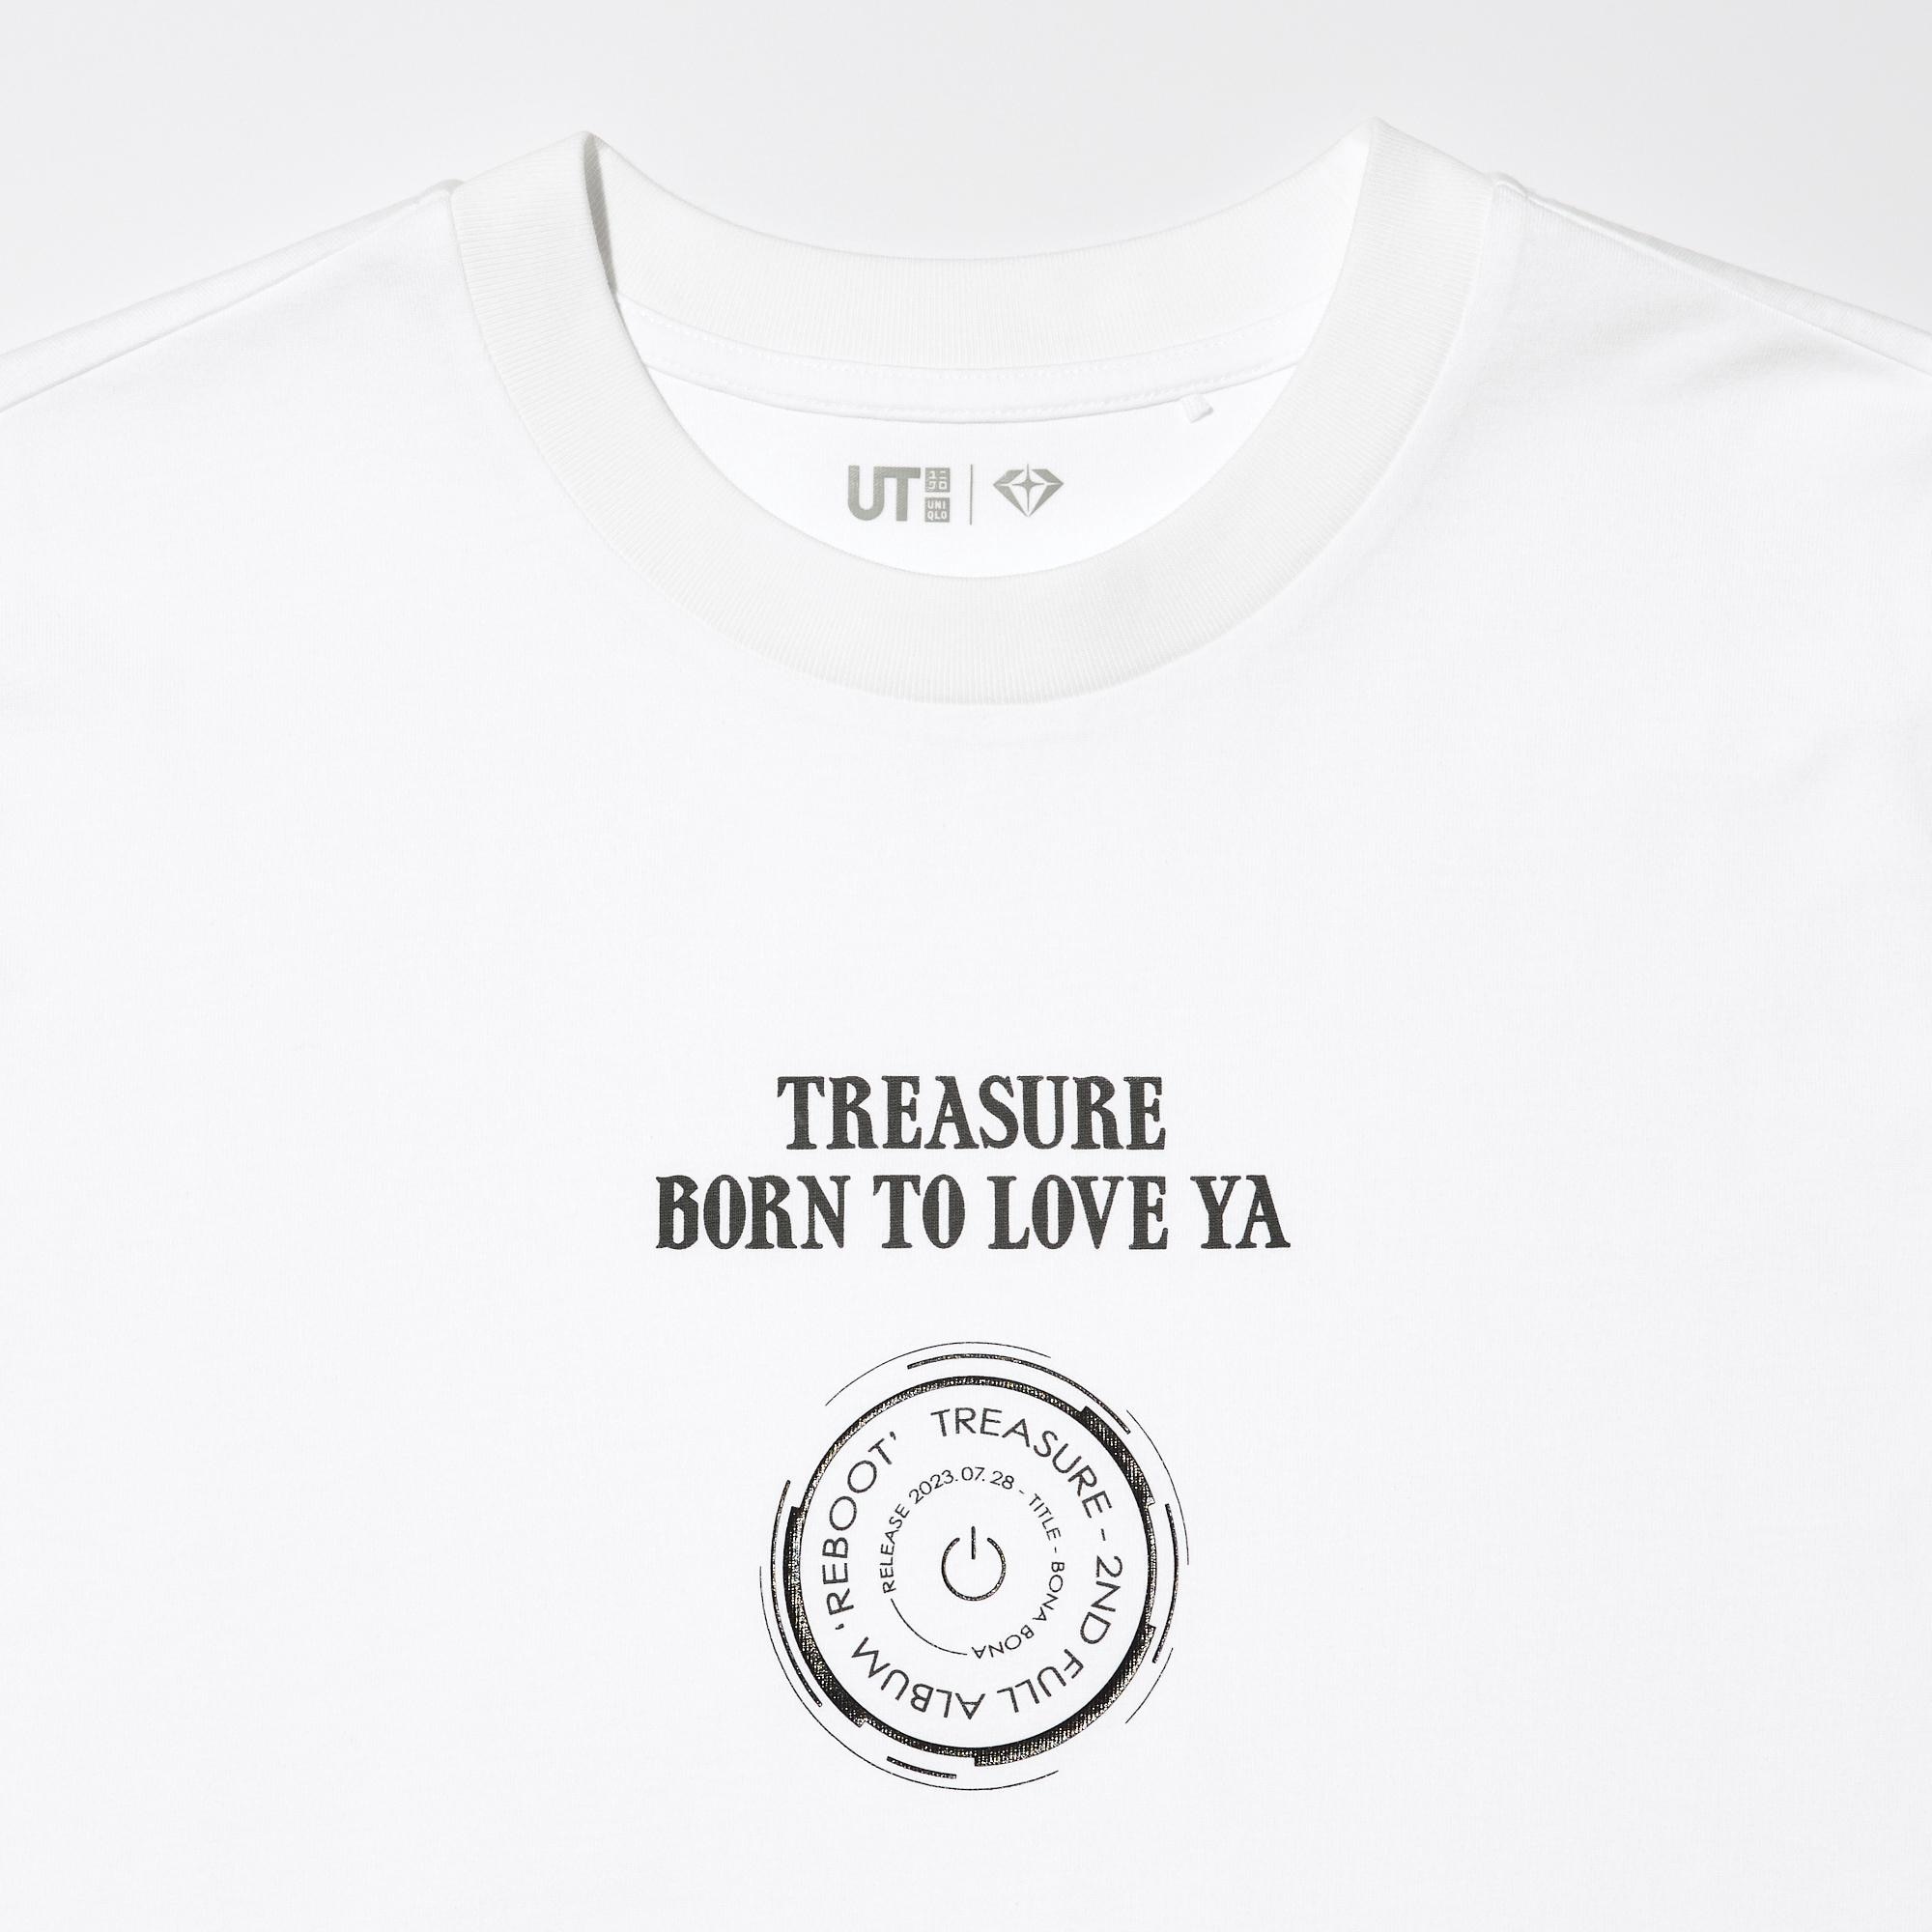 Find Your TREASURE UT (Short-Sleeve Graphic T-Shirt) (BONA BONA)